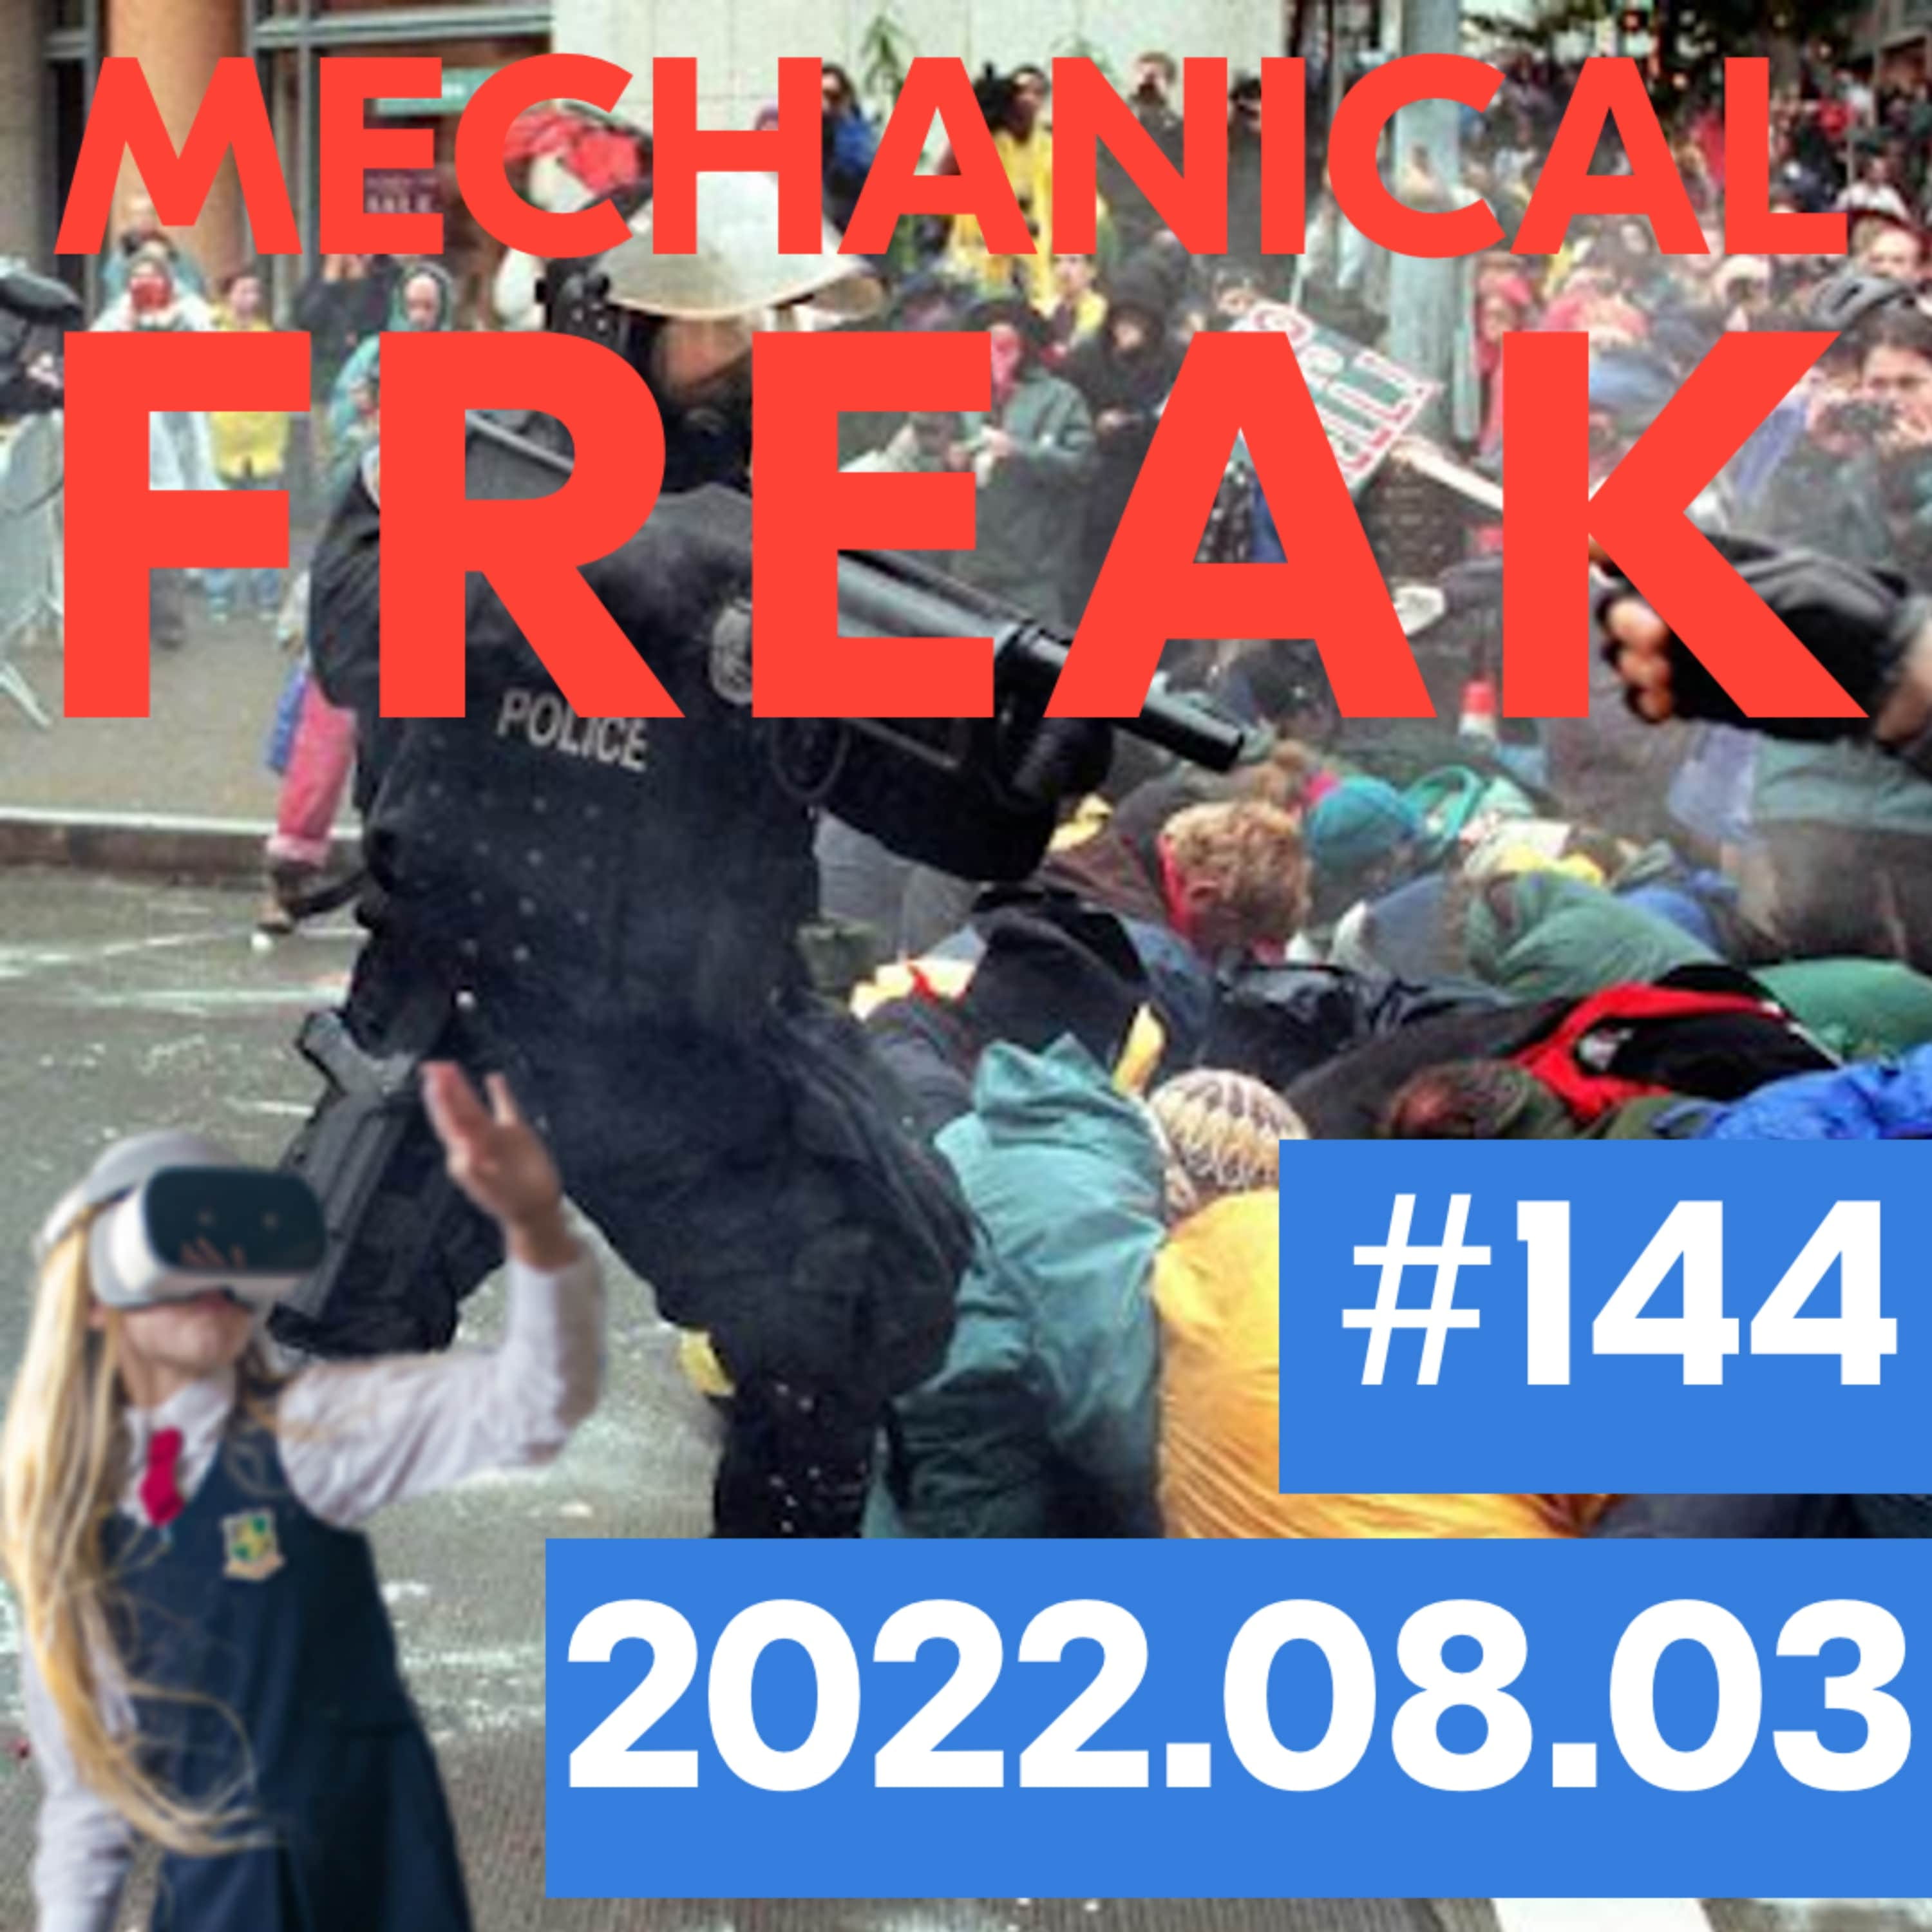 Episode #mechanical-freak-144 cover